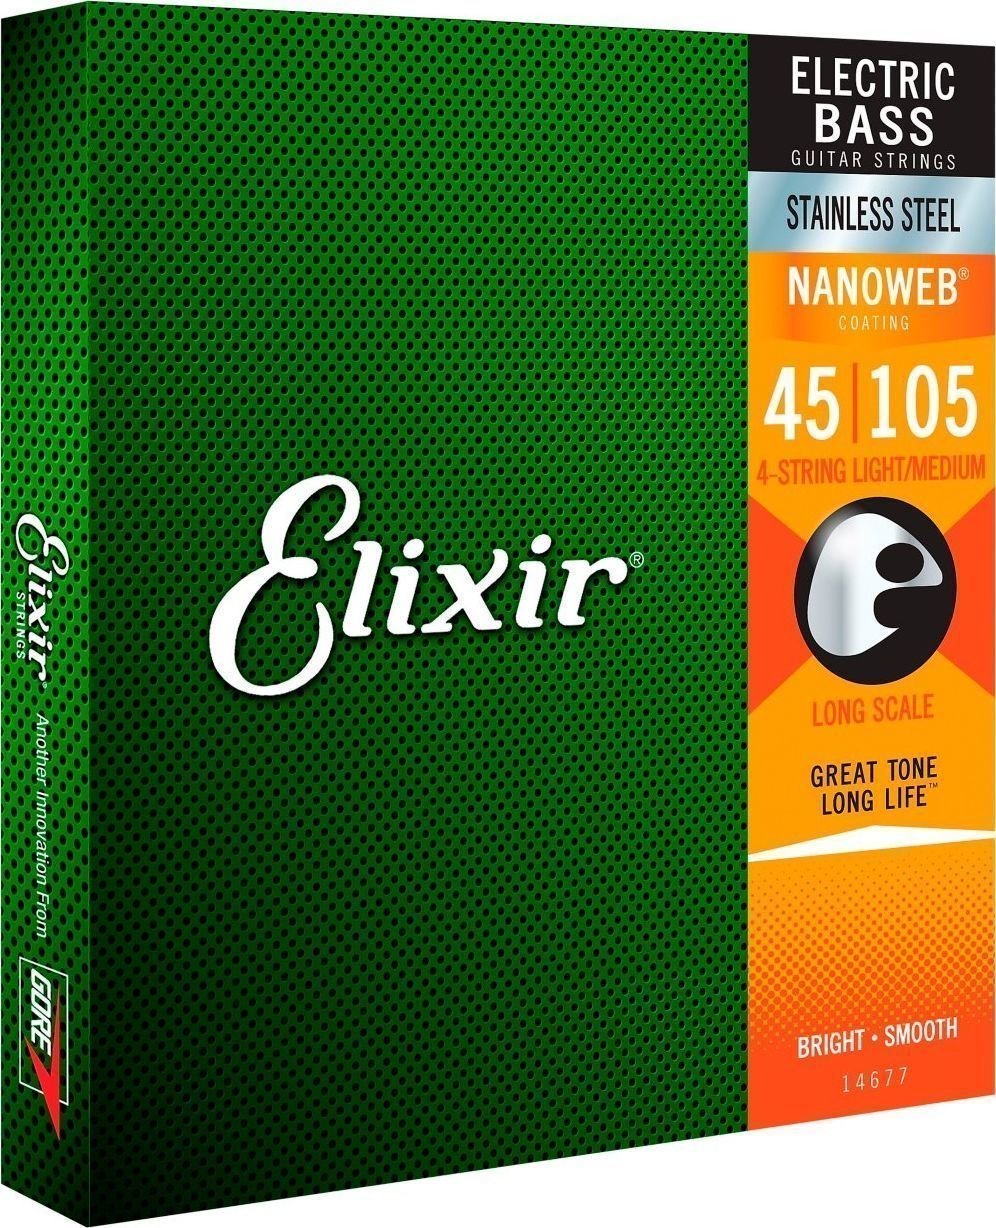 Struny pro baskytaru Elixir 14677 Nanoweb